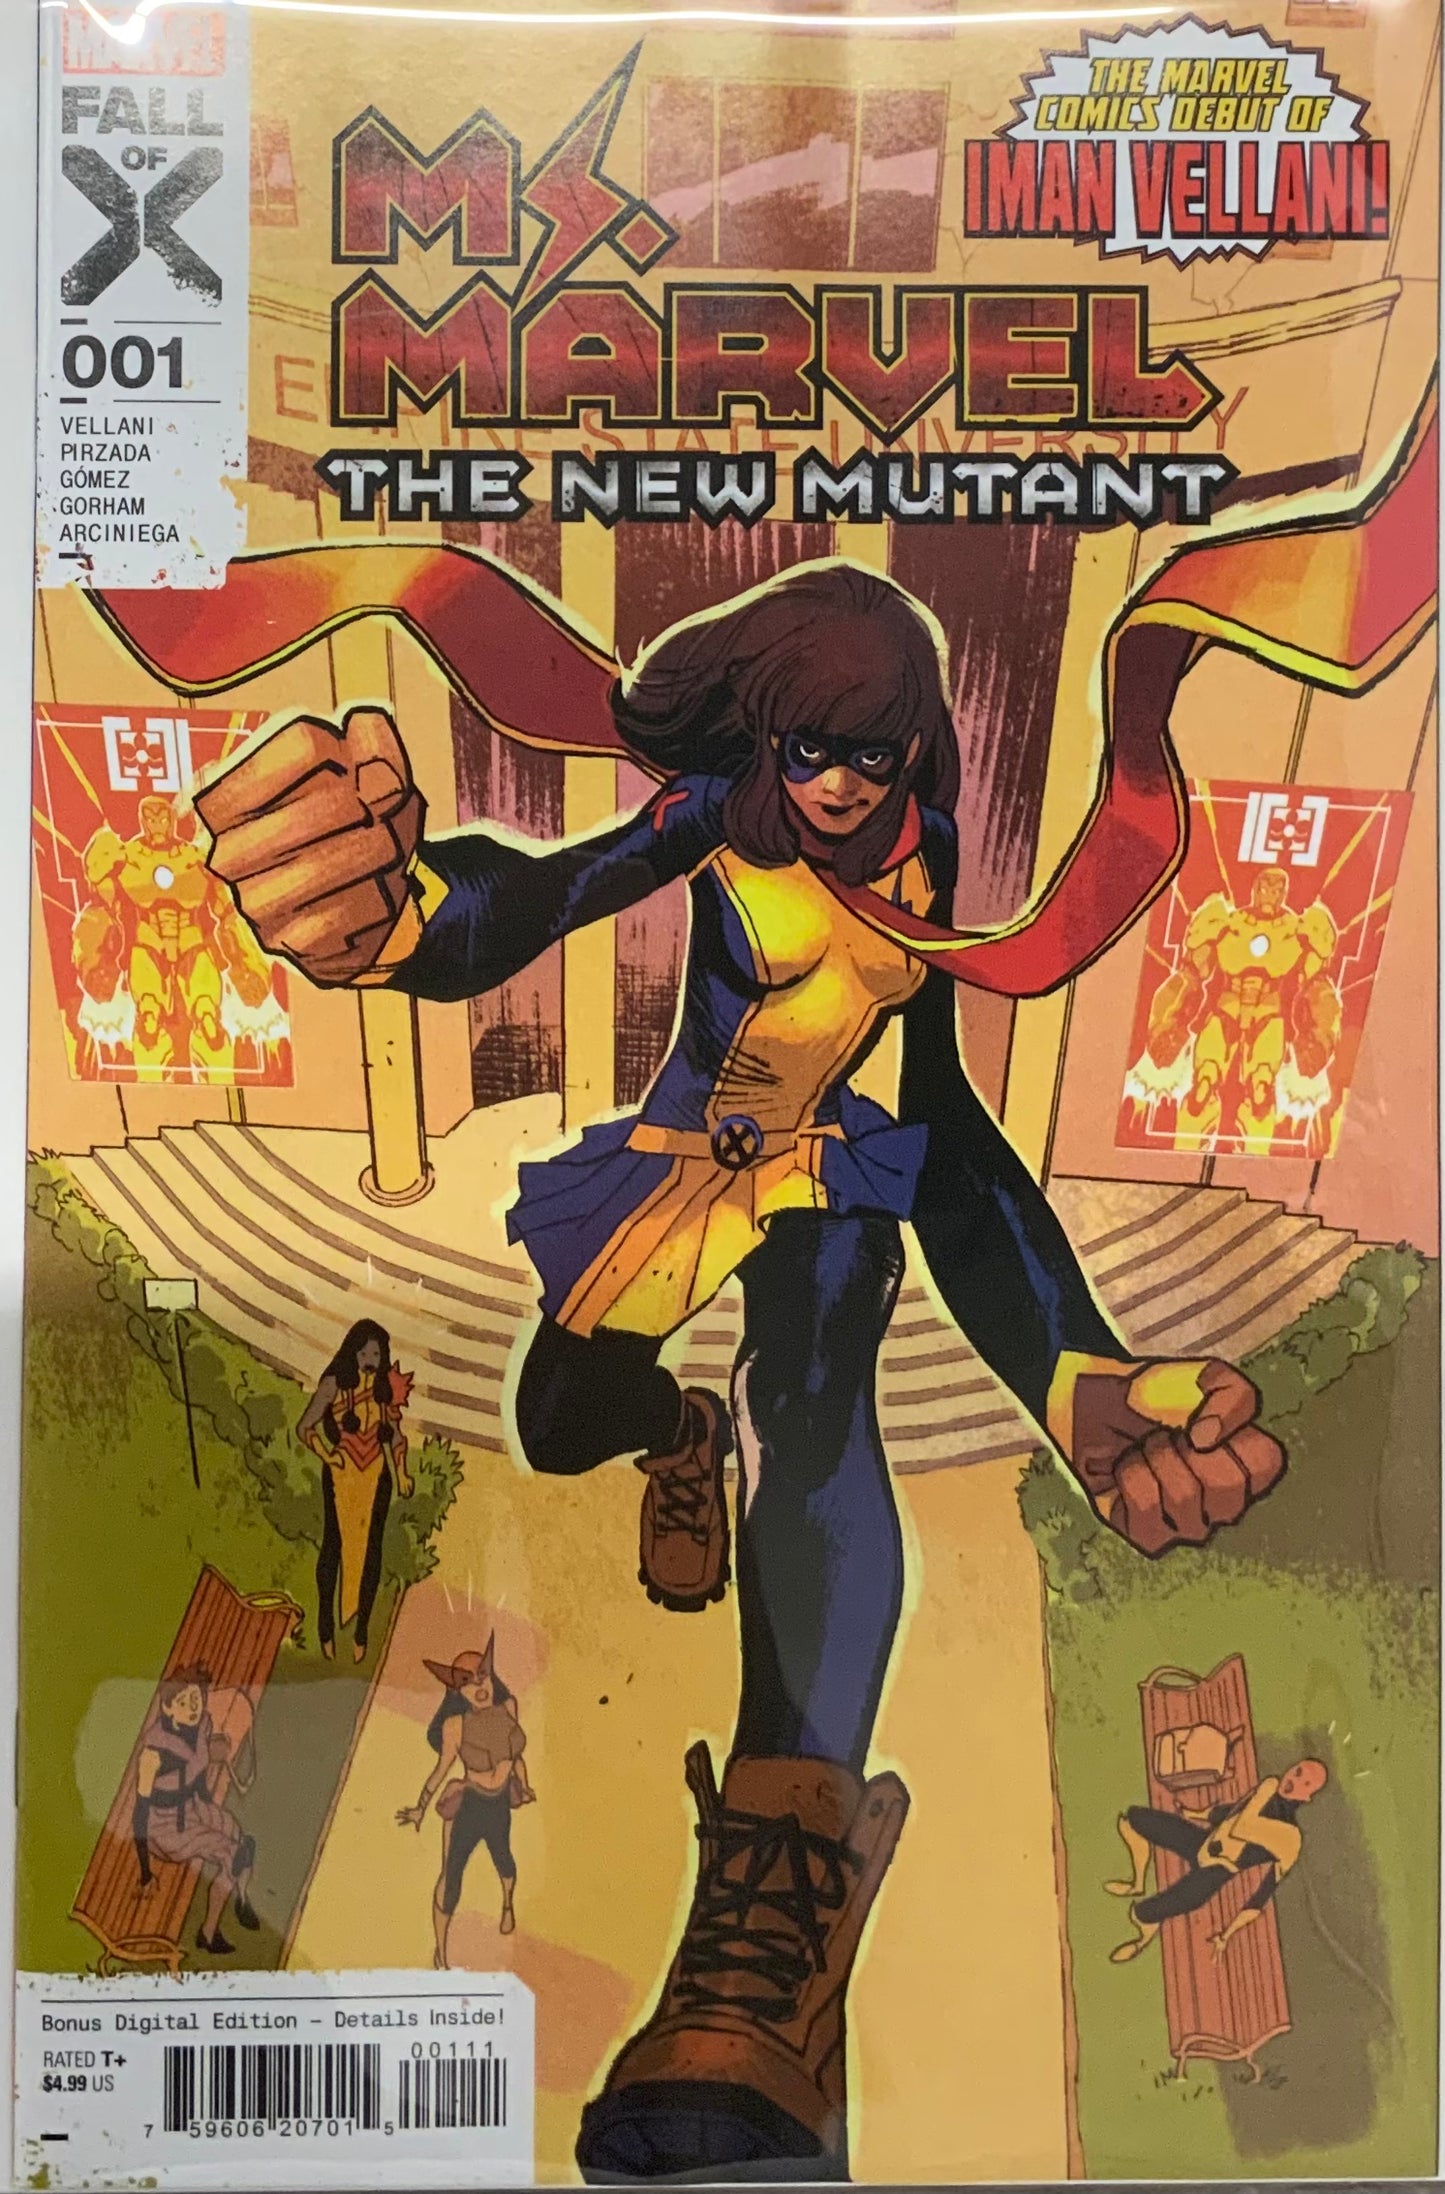 Ms. Marvel: The New Mutant - Series 4 vol 1